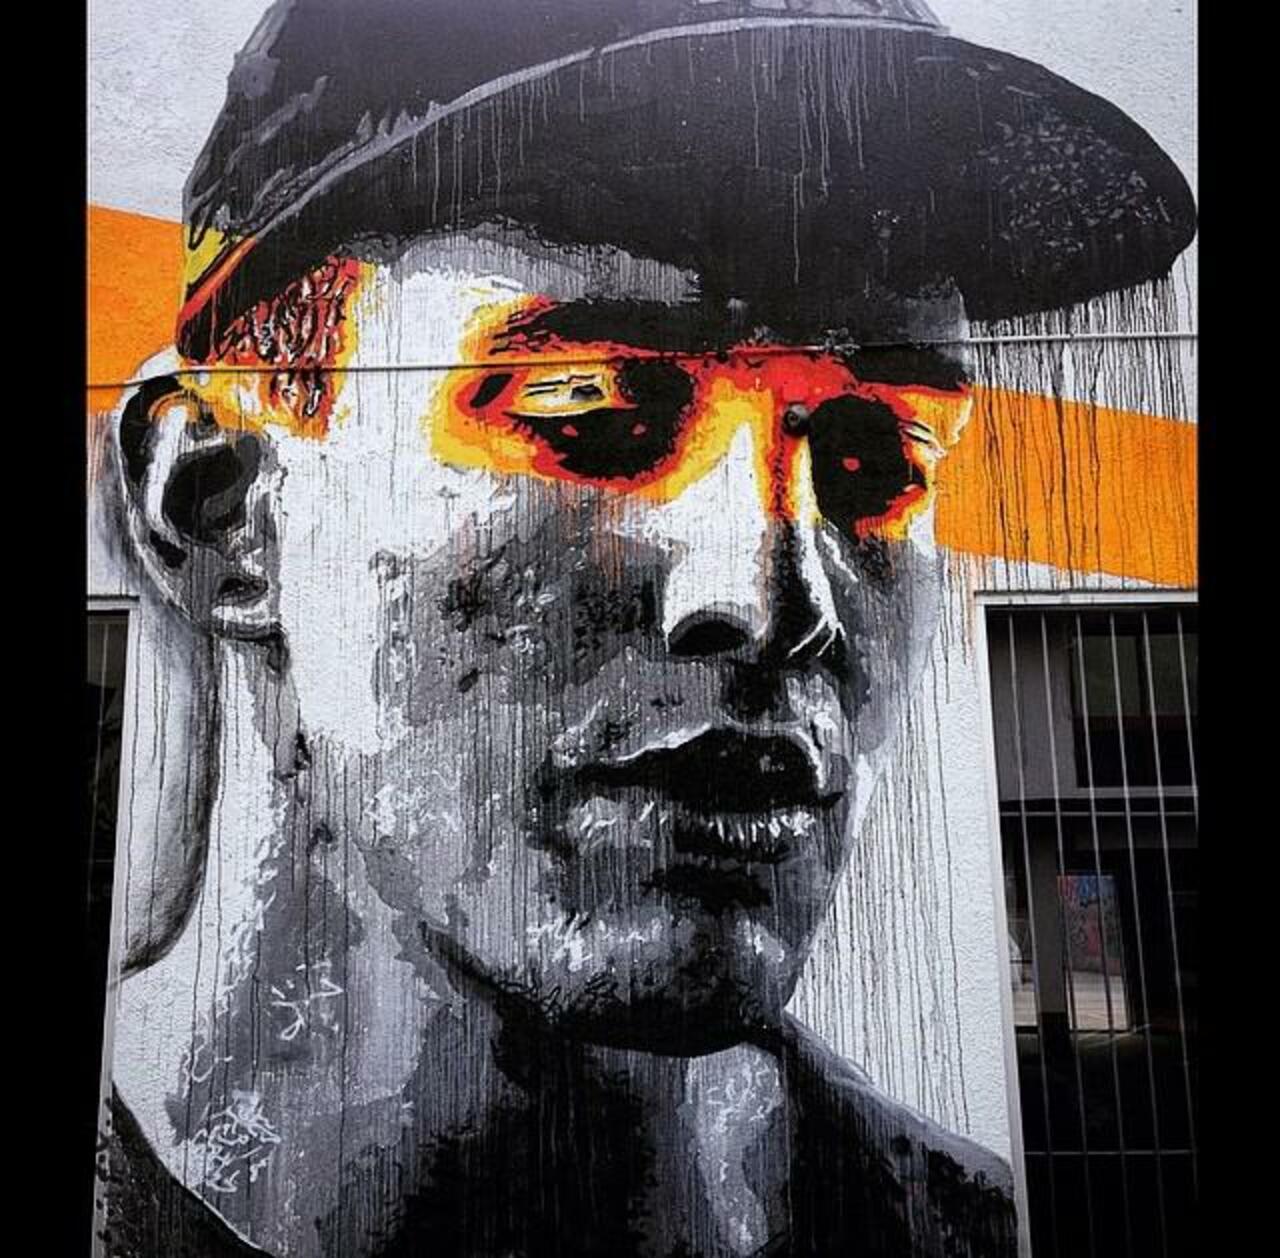 Artist Nils Westergard Street Art portrait in Miami 

#art #graffiti #mural #streetart http://t.co/46aE4PAKgF